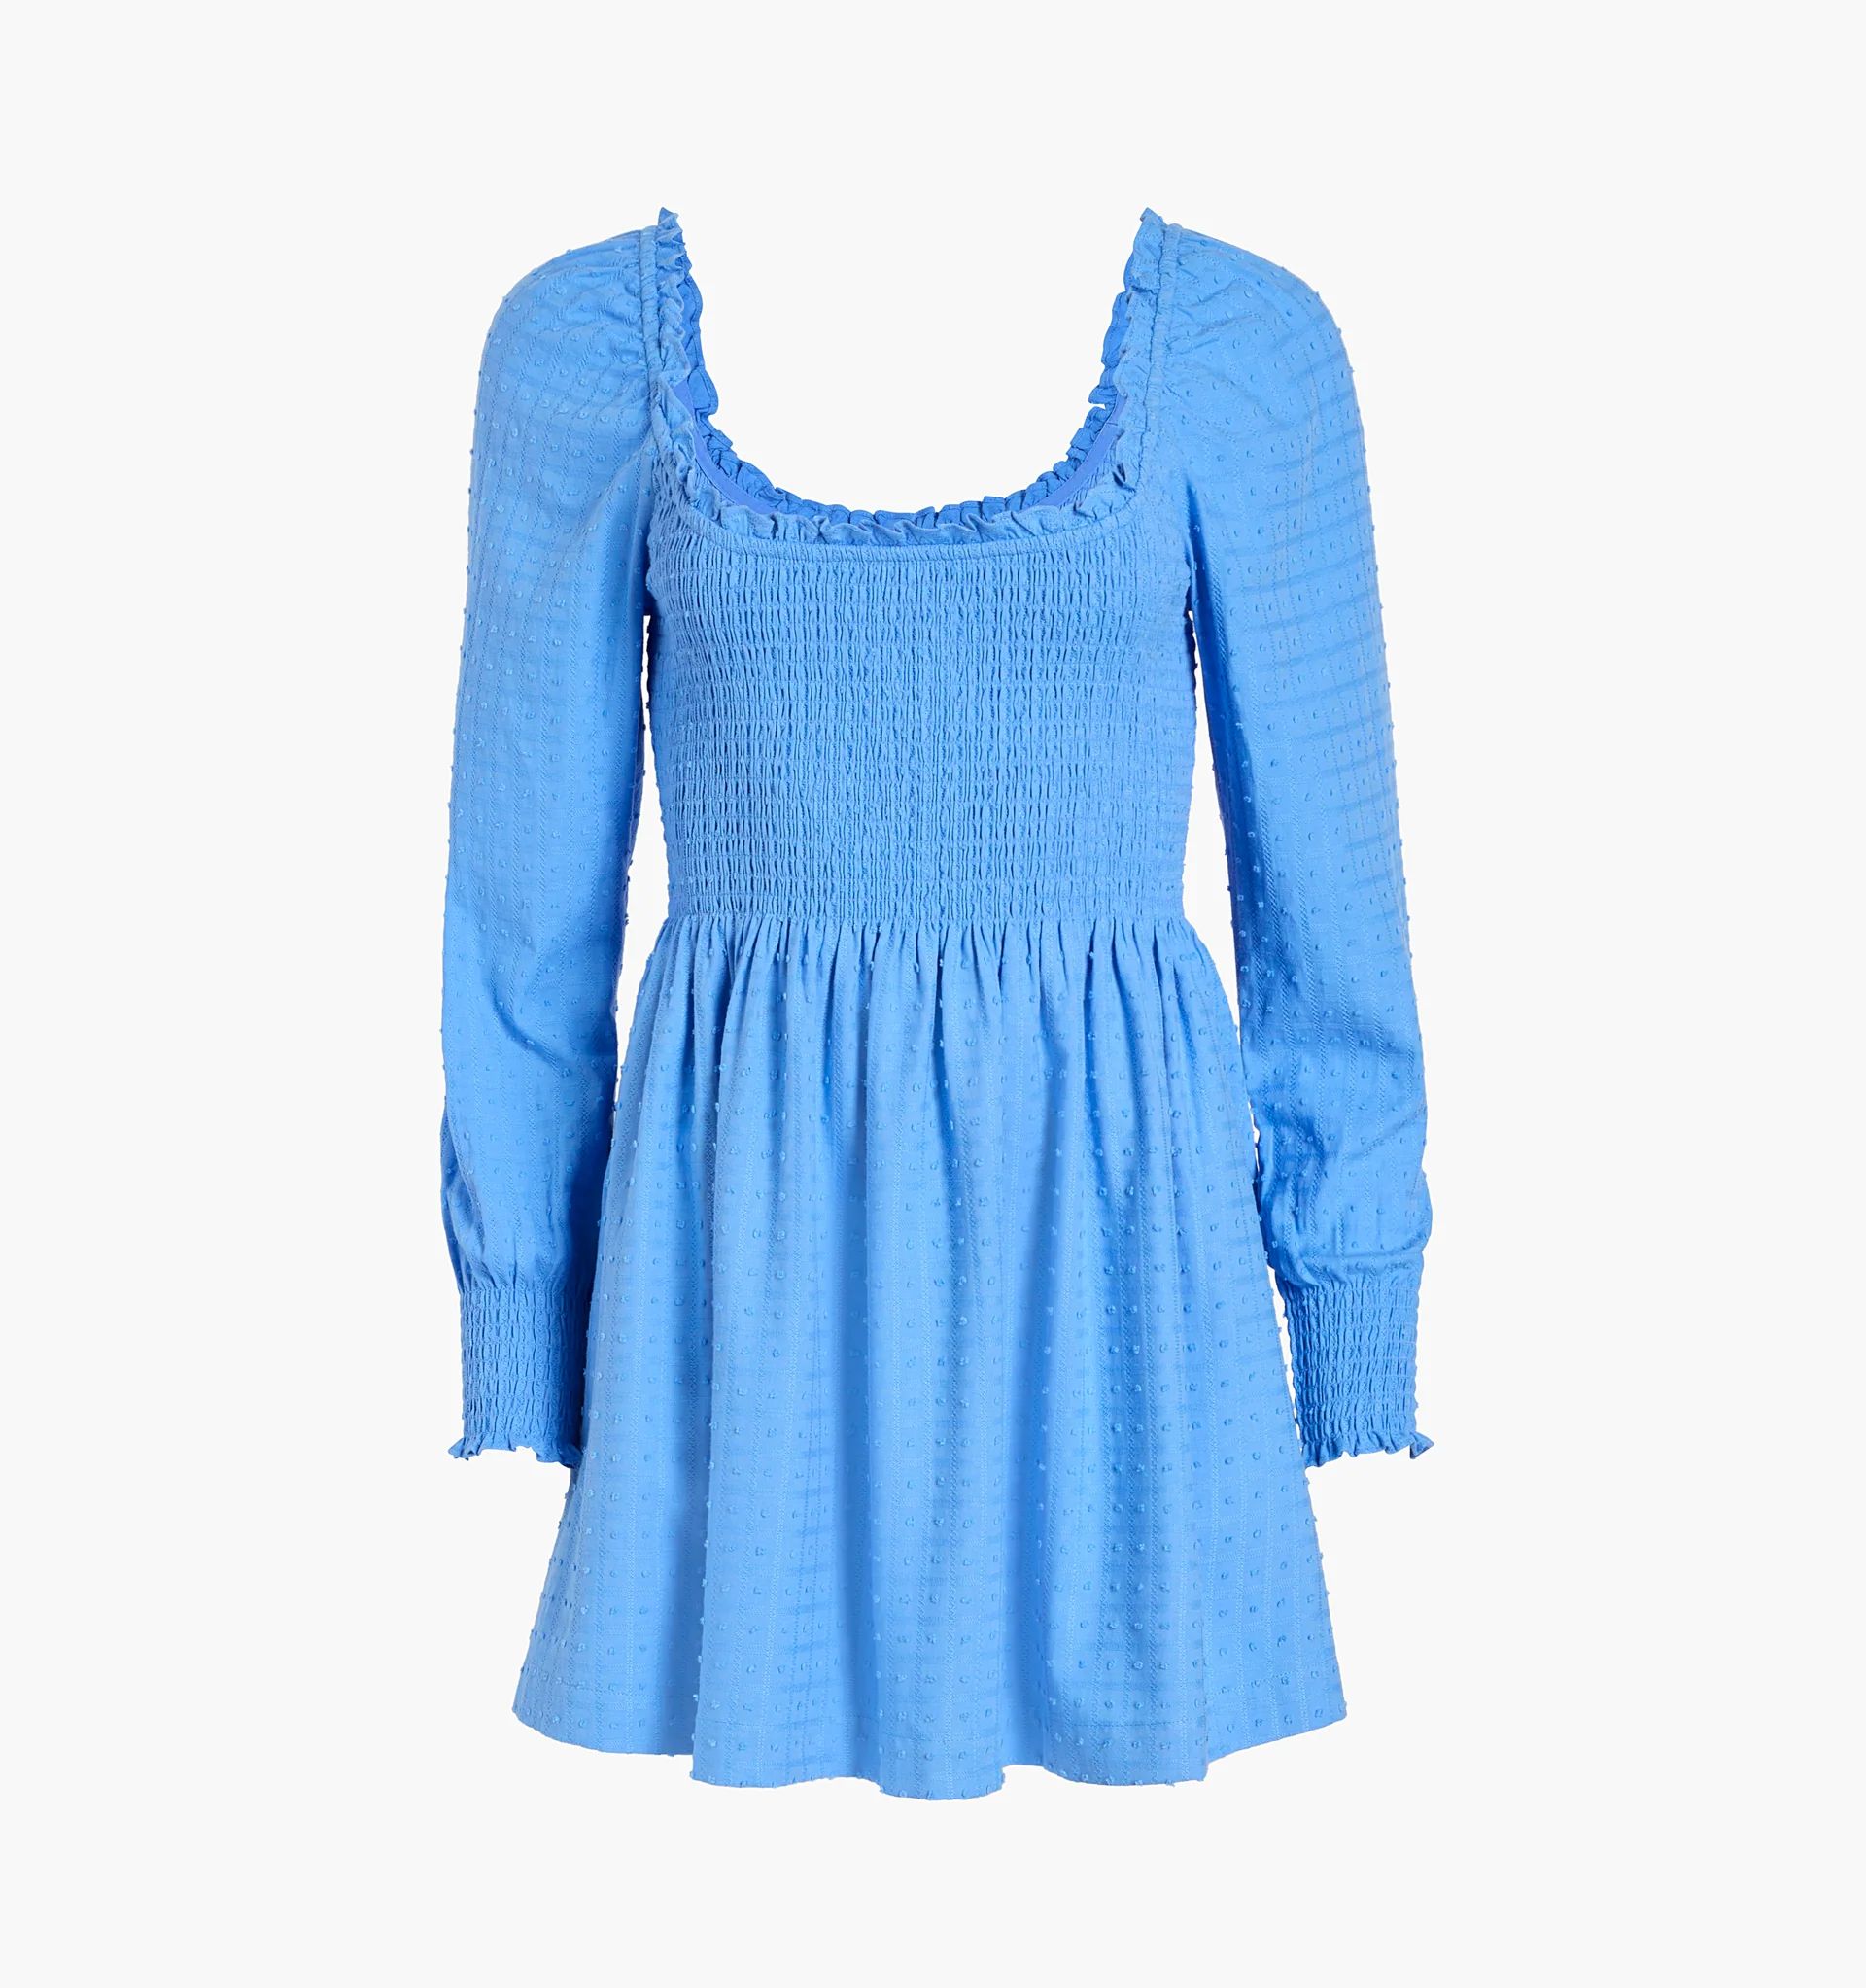 The Norah Nap Dress - Hydrangea Blue Textured Clip Dot | Hill House Home